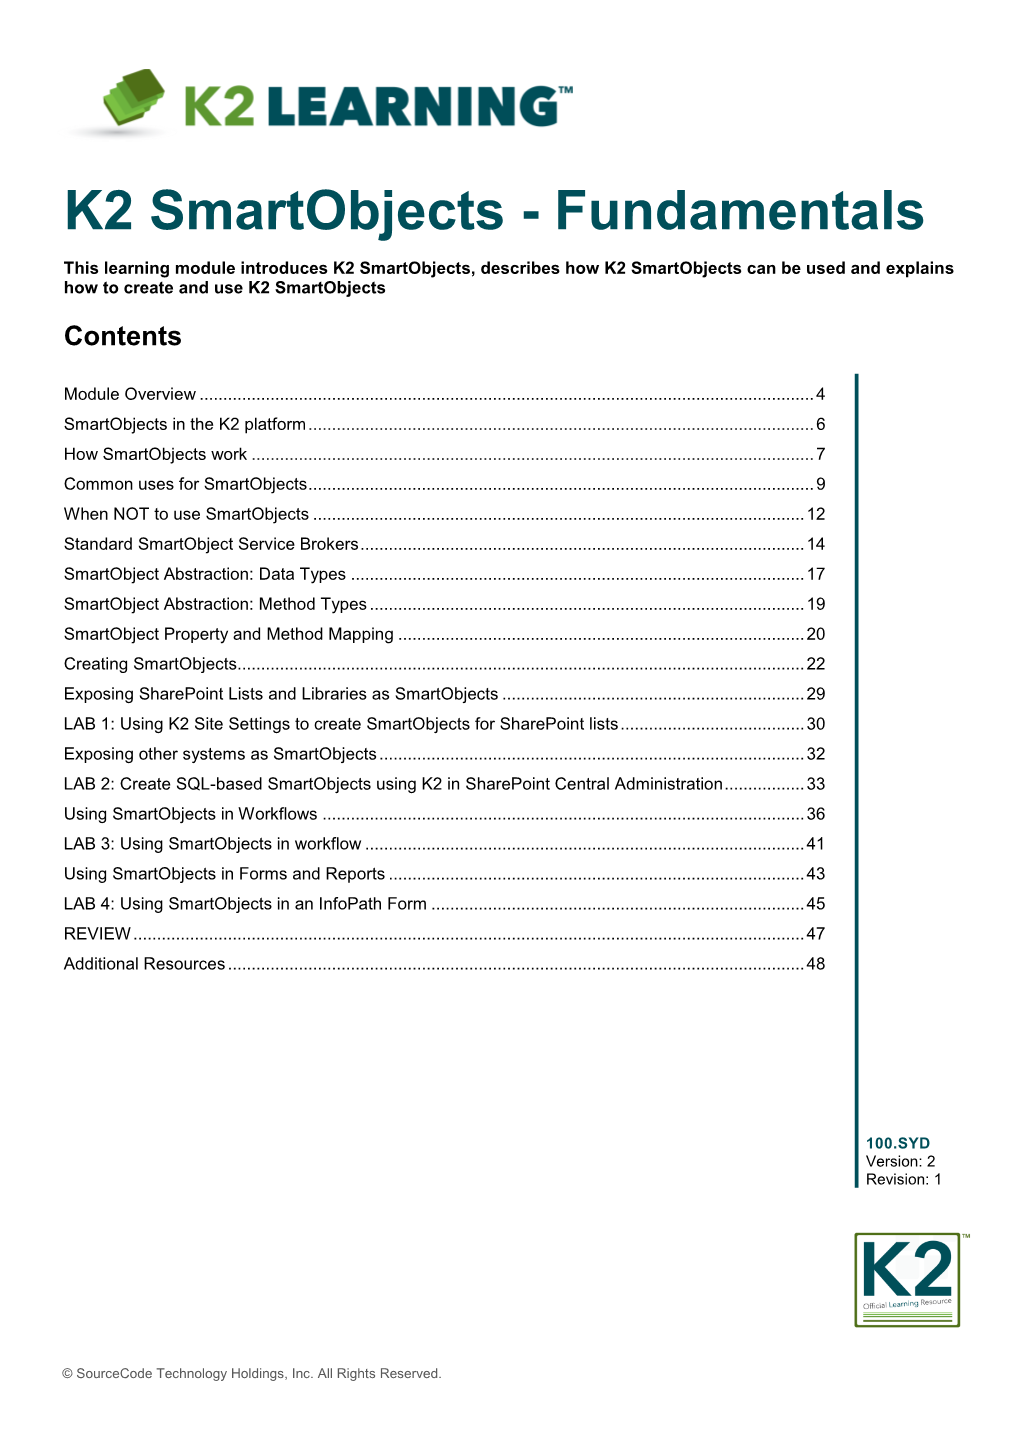 K2 Smartobjects - Fundamentals